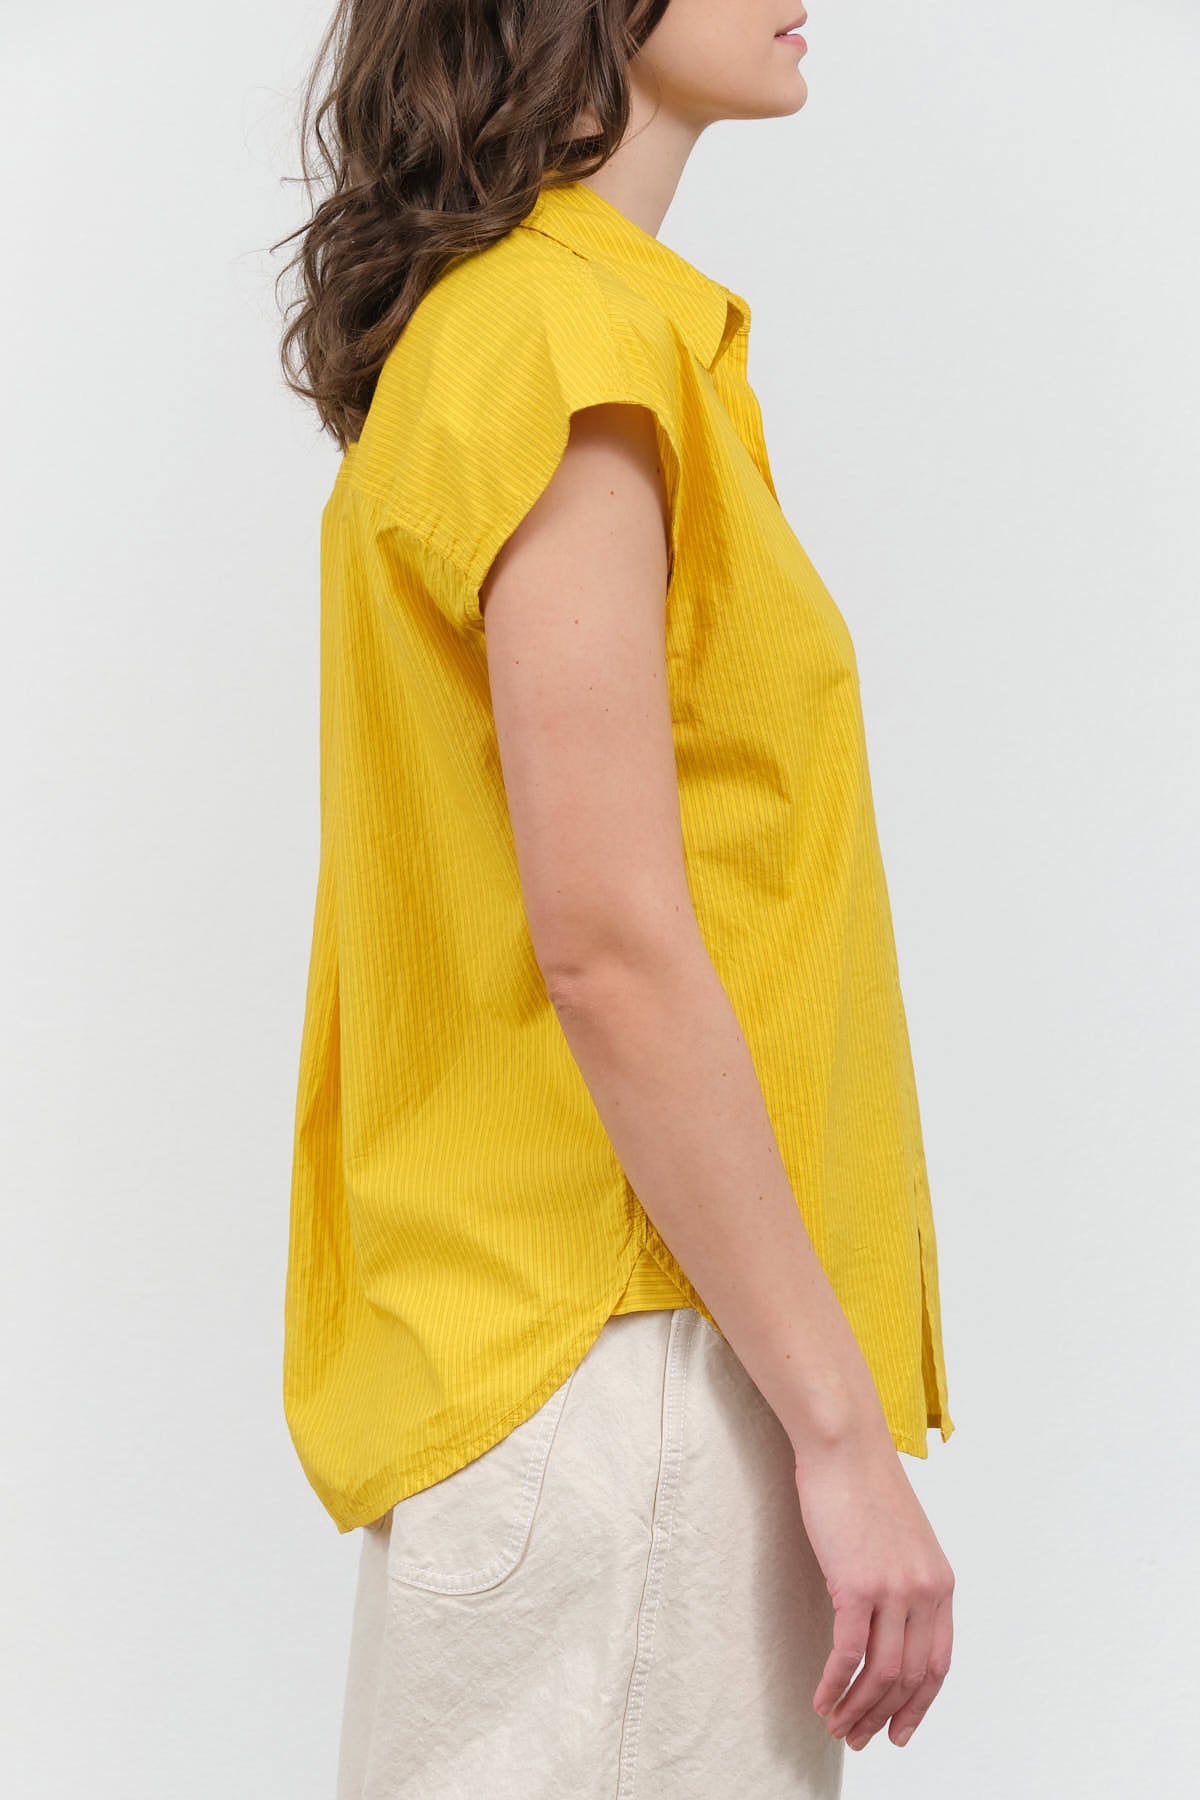 Side view of Ruth Sleeveless Shirt in Lemon